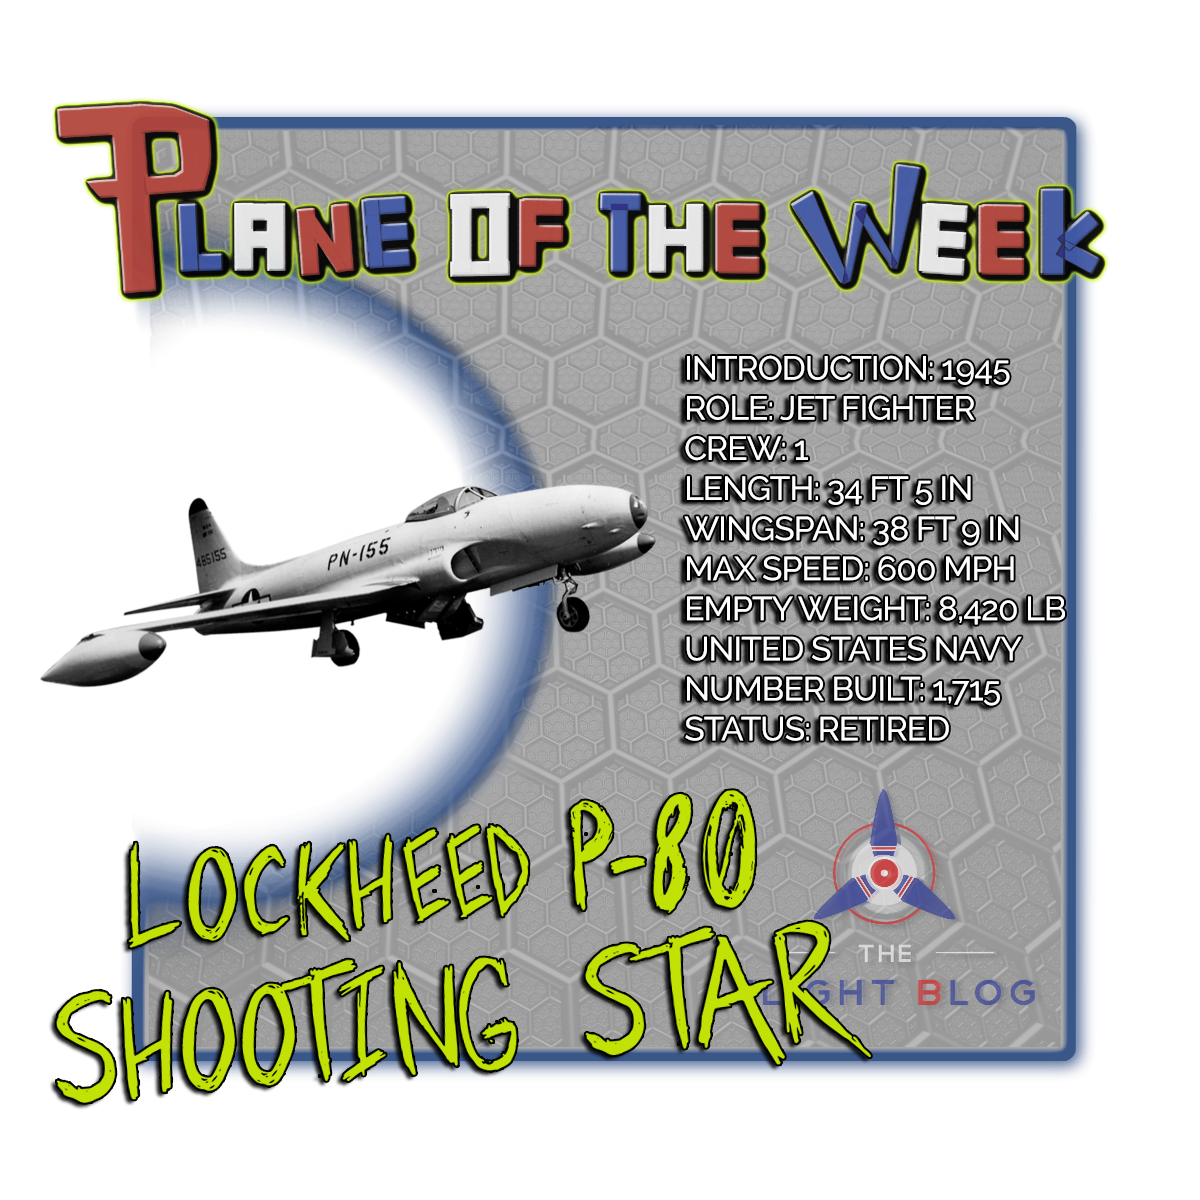 Lockheed P-80, lockeed shooting star, P-80 shooting star, plane of the week, p-80 aircraft specs